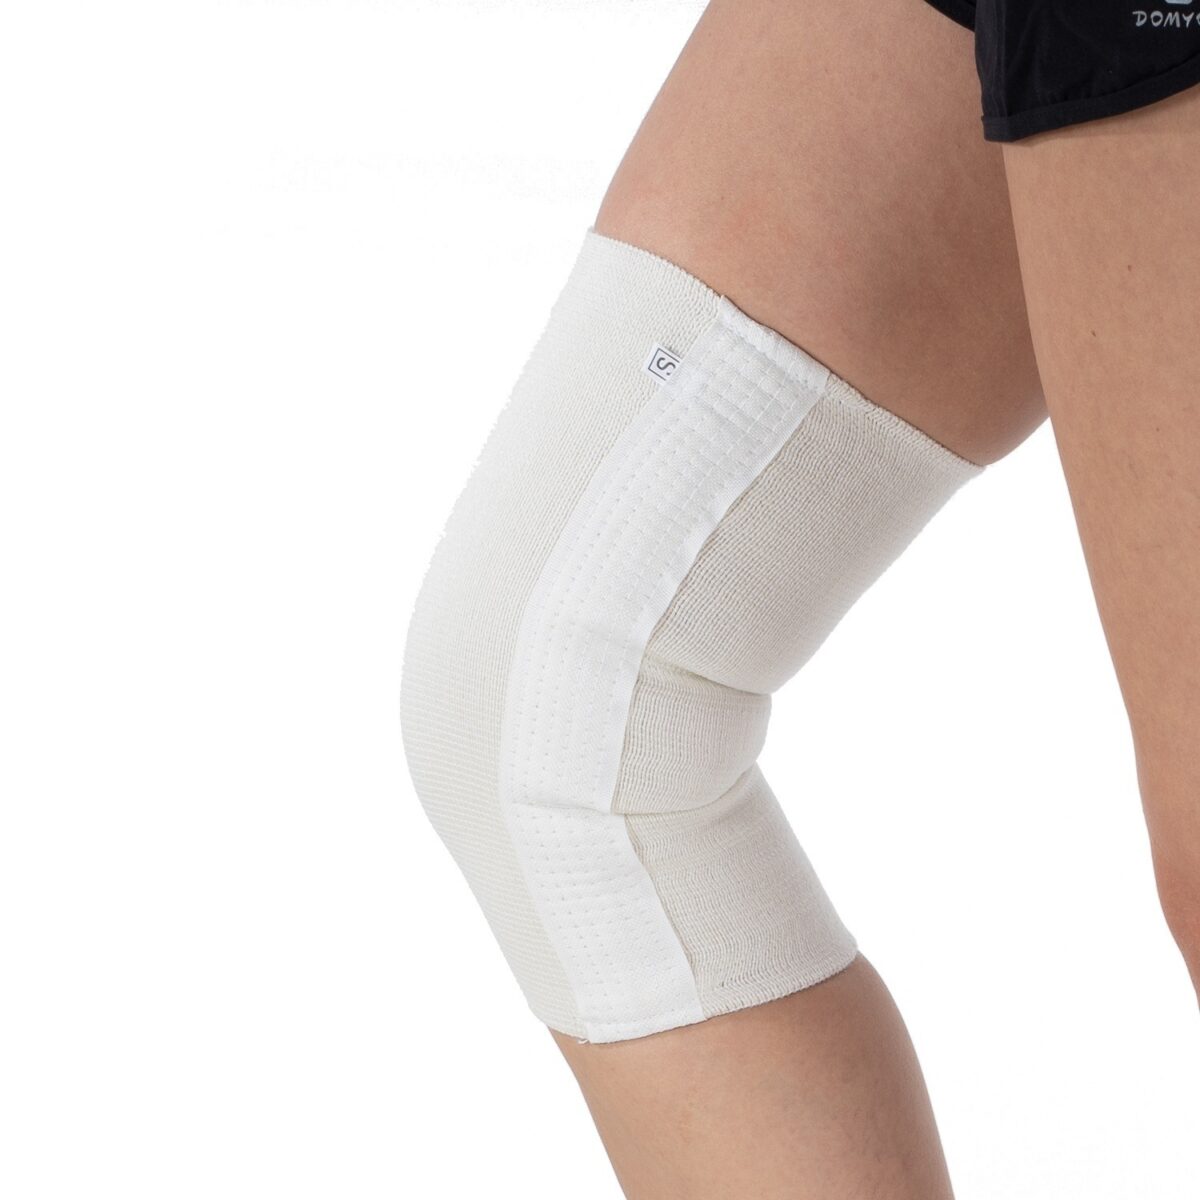 wingmed orthopedic equipments W513 wool knee support 03